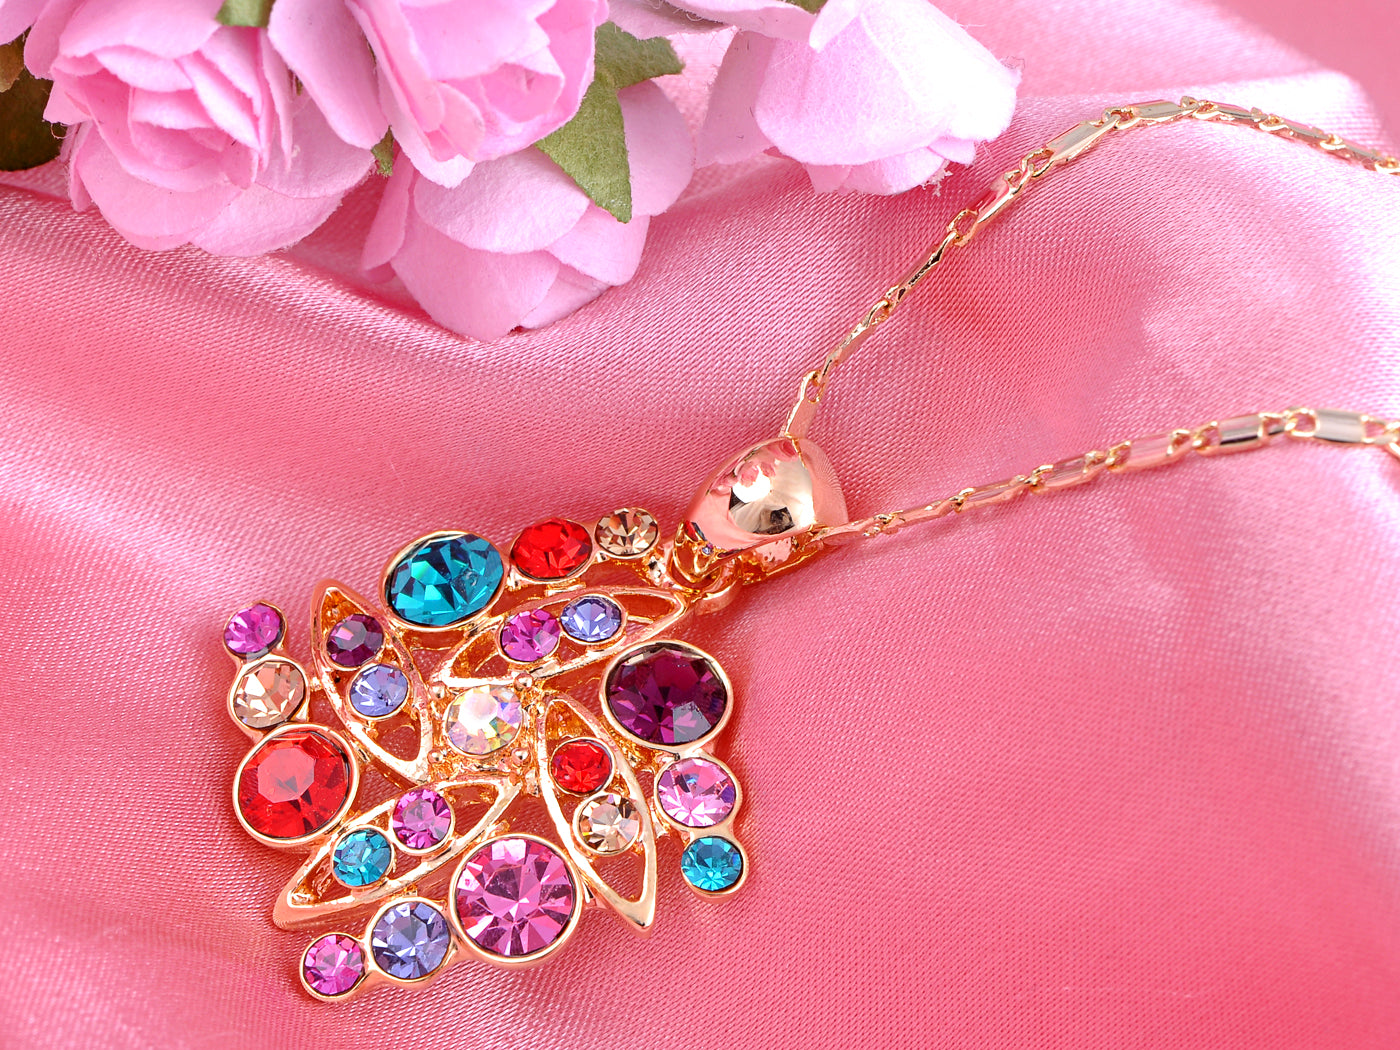 Swarovski Crystal Colorful Elements Square Shape Pendant Necklace